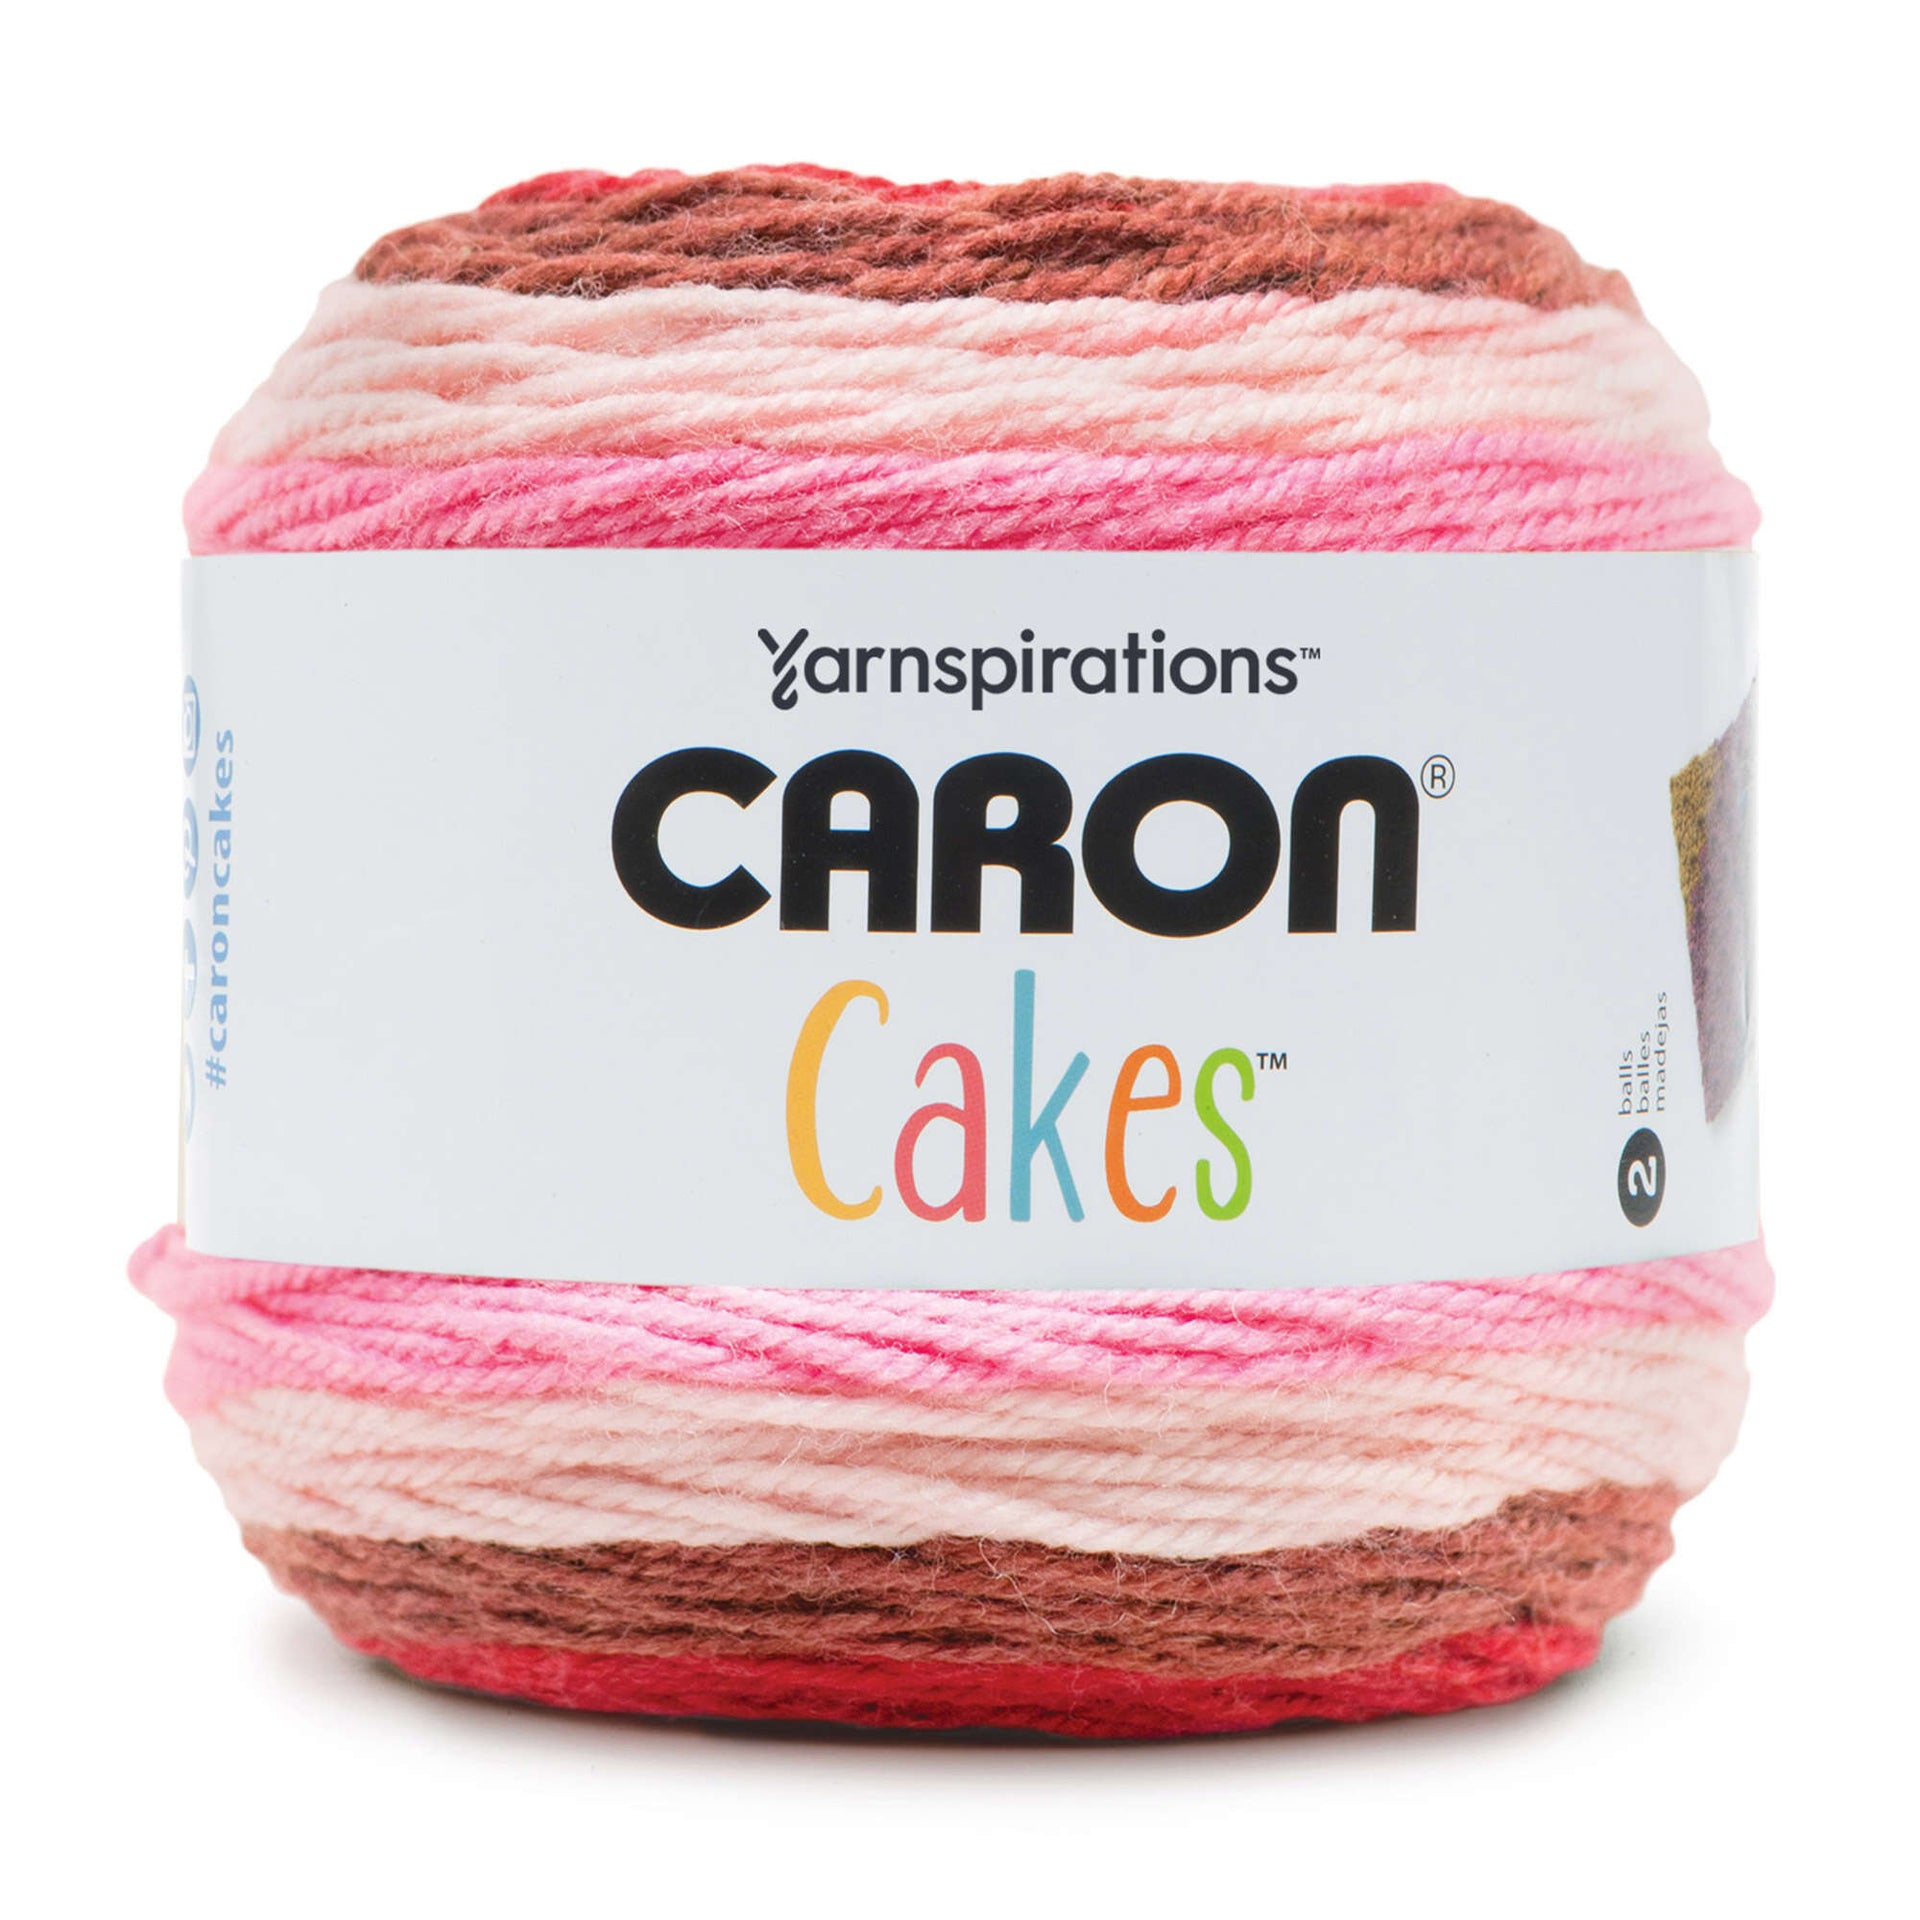 caron big cakes Archives - Crochet It Creations